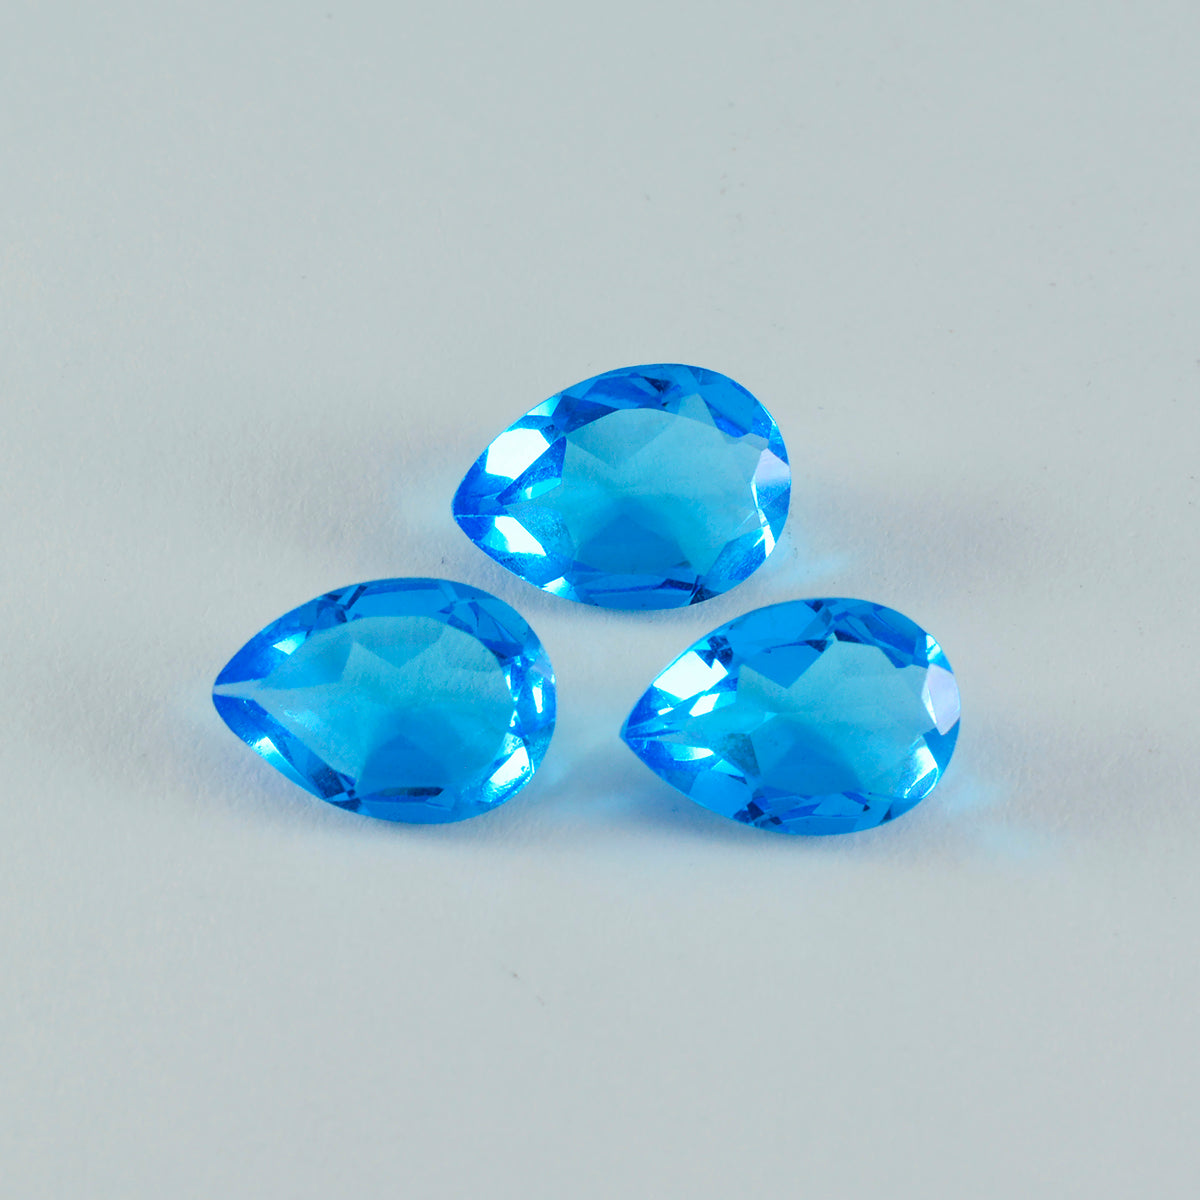 riyogems 1 st blå topas cz facetterad 12x16 mm päronform häpnadsväckande kvalitetspärla